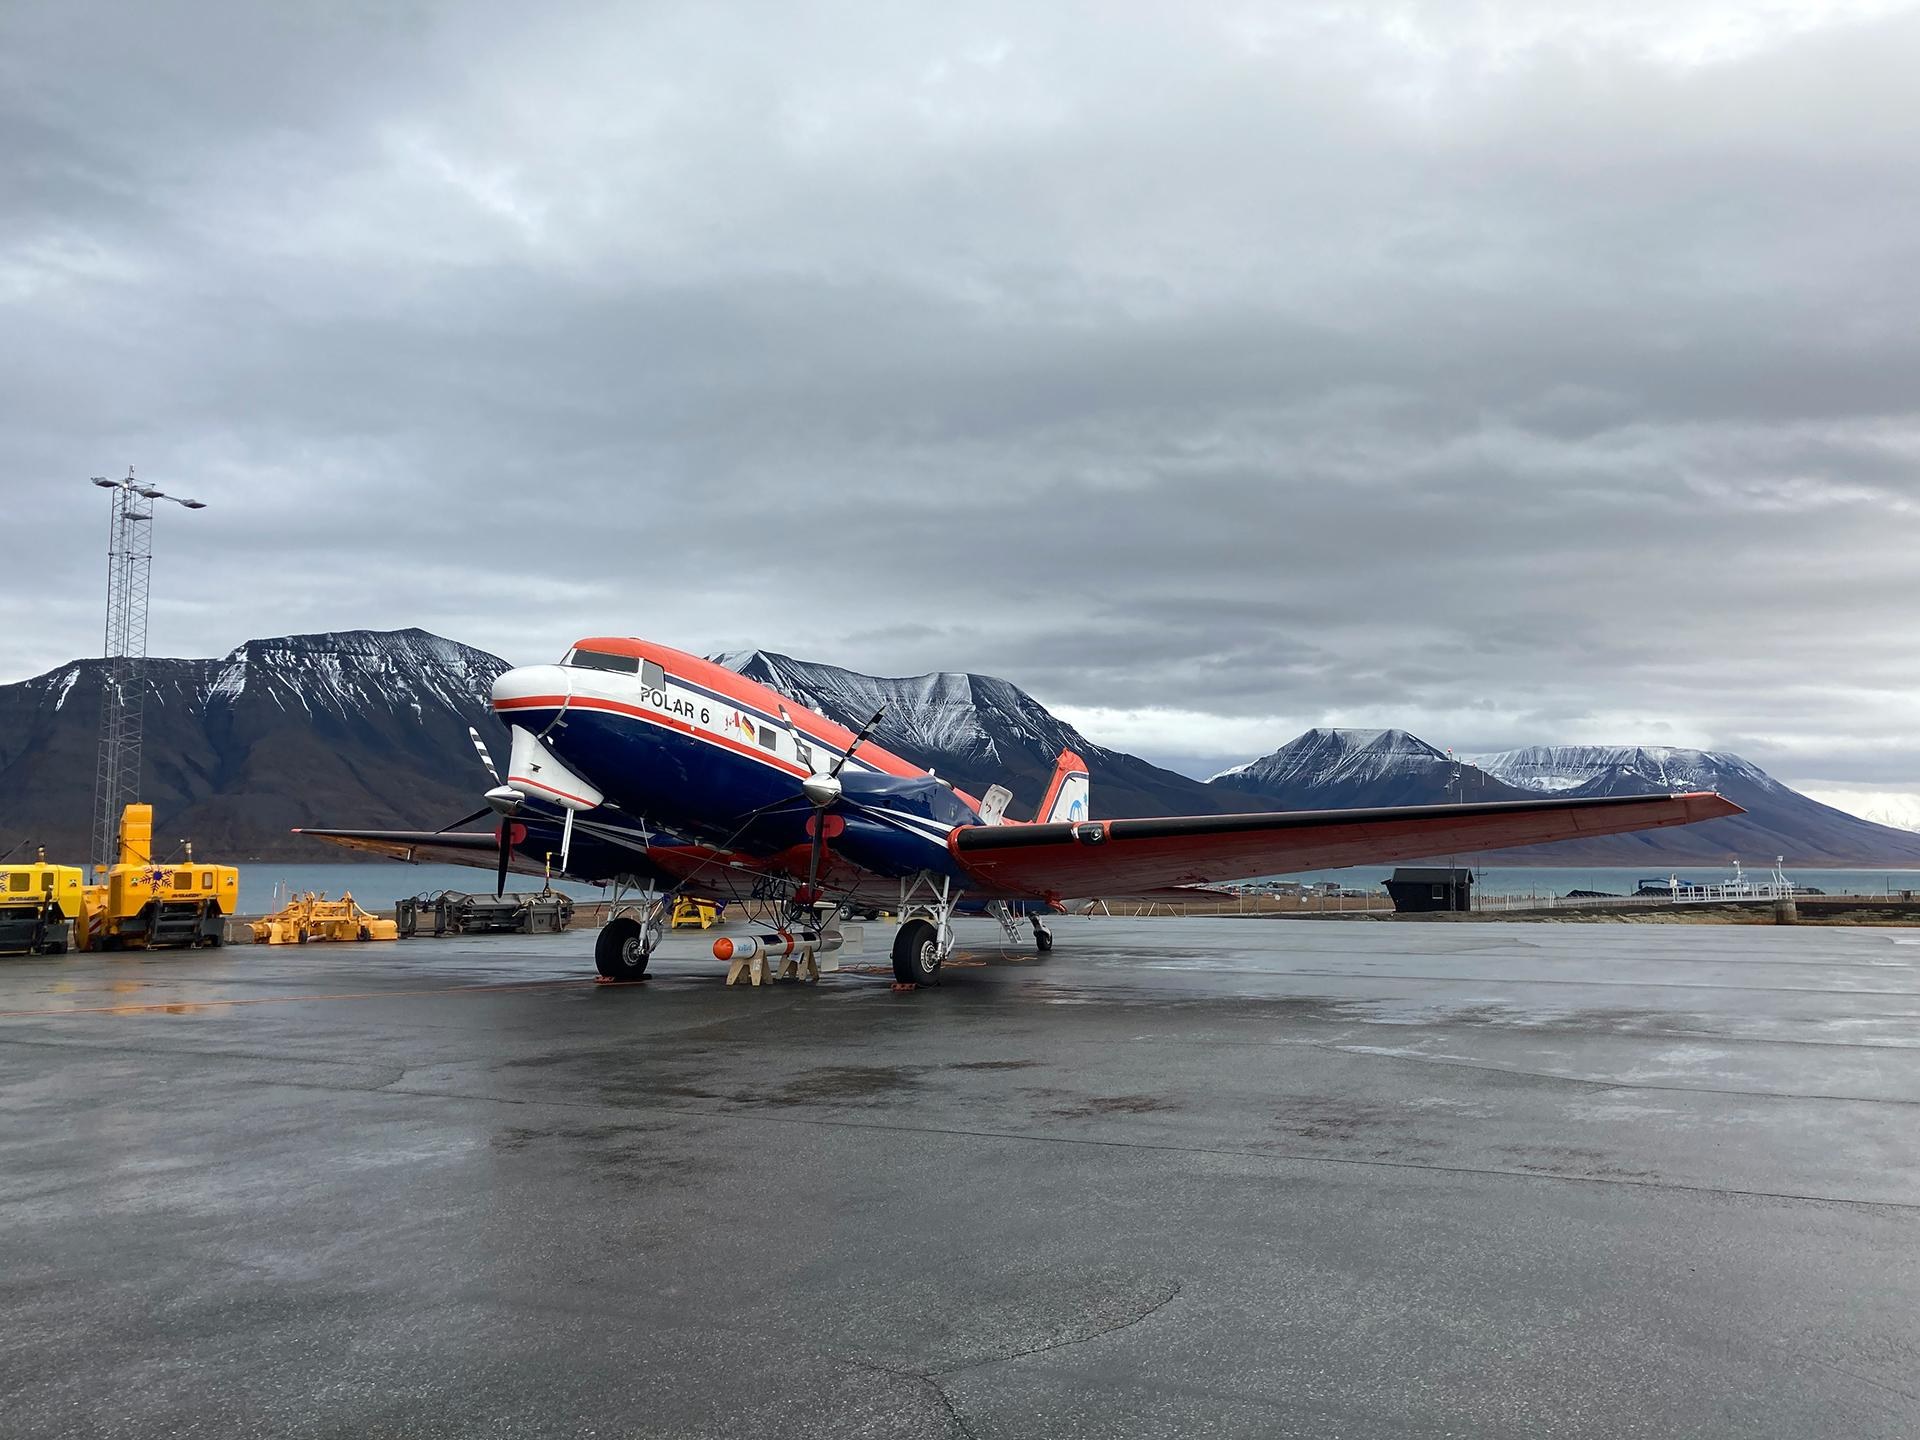 Forschungsflugzeug Polar 6 am Flughafen Longyearbyen, Spitzbergen